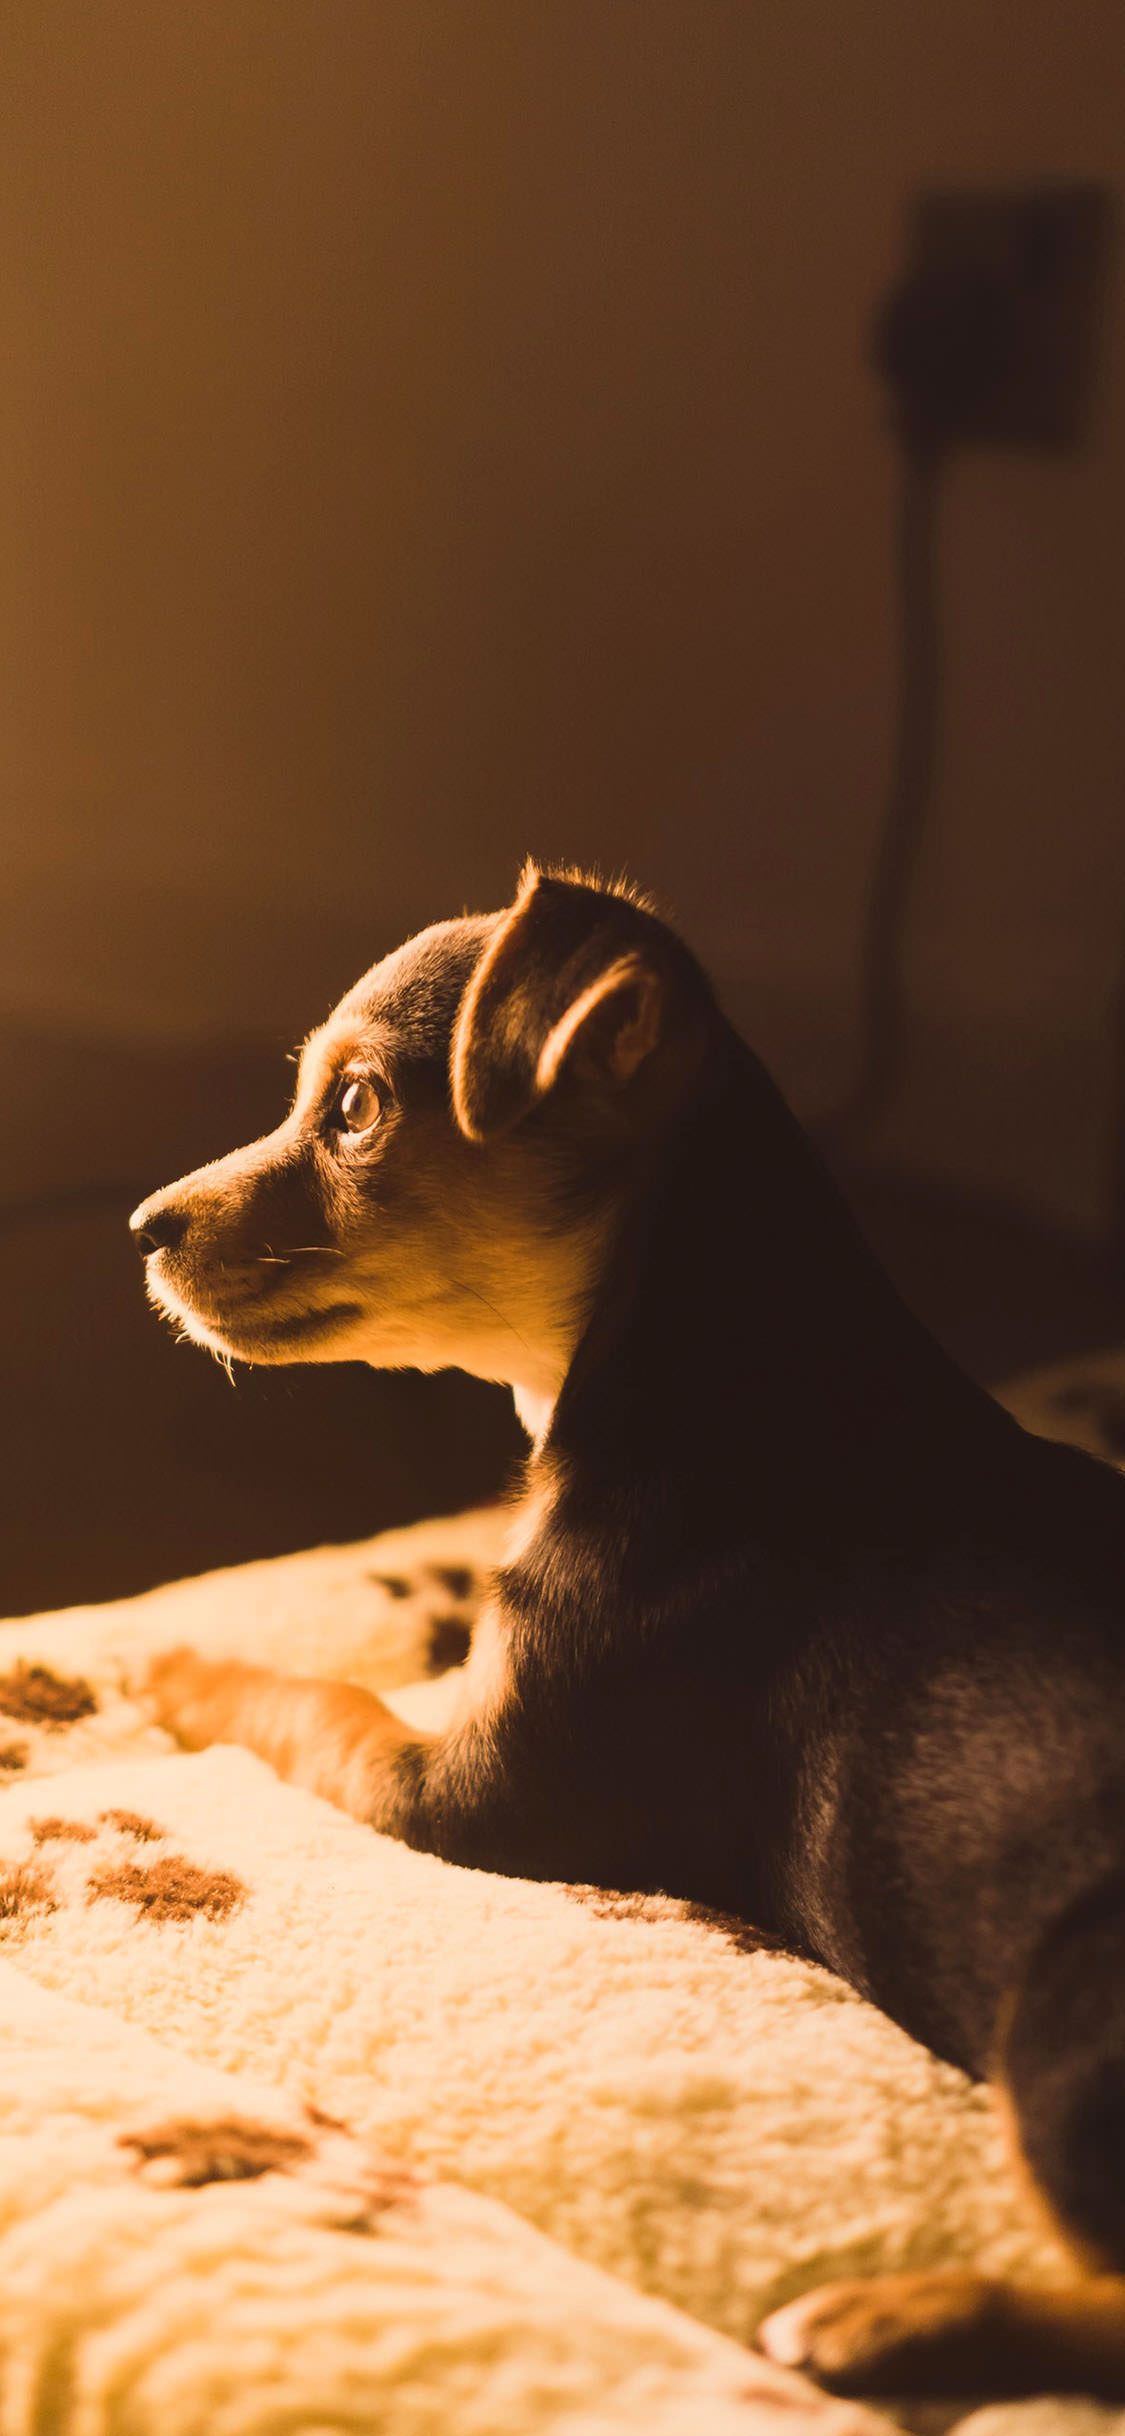  Süße Hunde Hintergrundbild 1125x2436. × 2436 Cute Puppy iPhone XS Wallpaper. Dog wallpaper iphone, Cute dogs image, Dog allergies